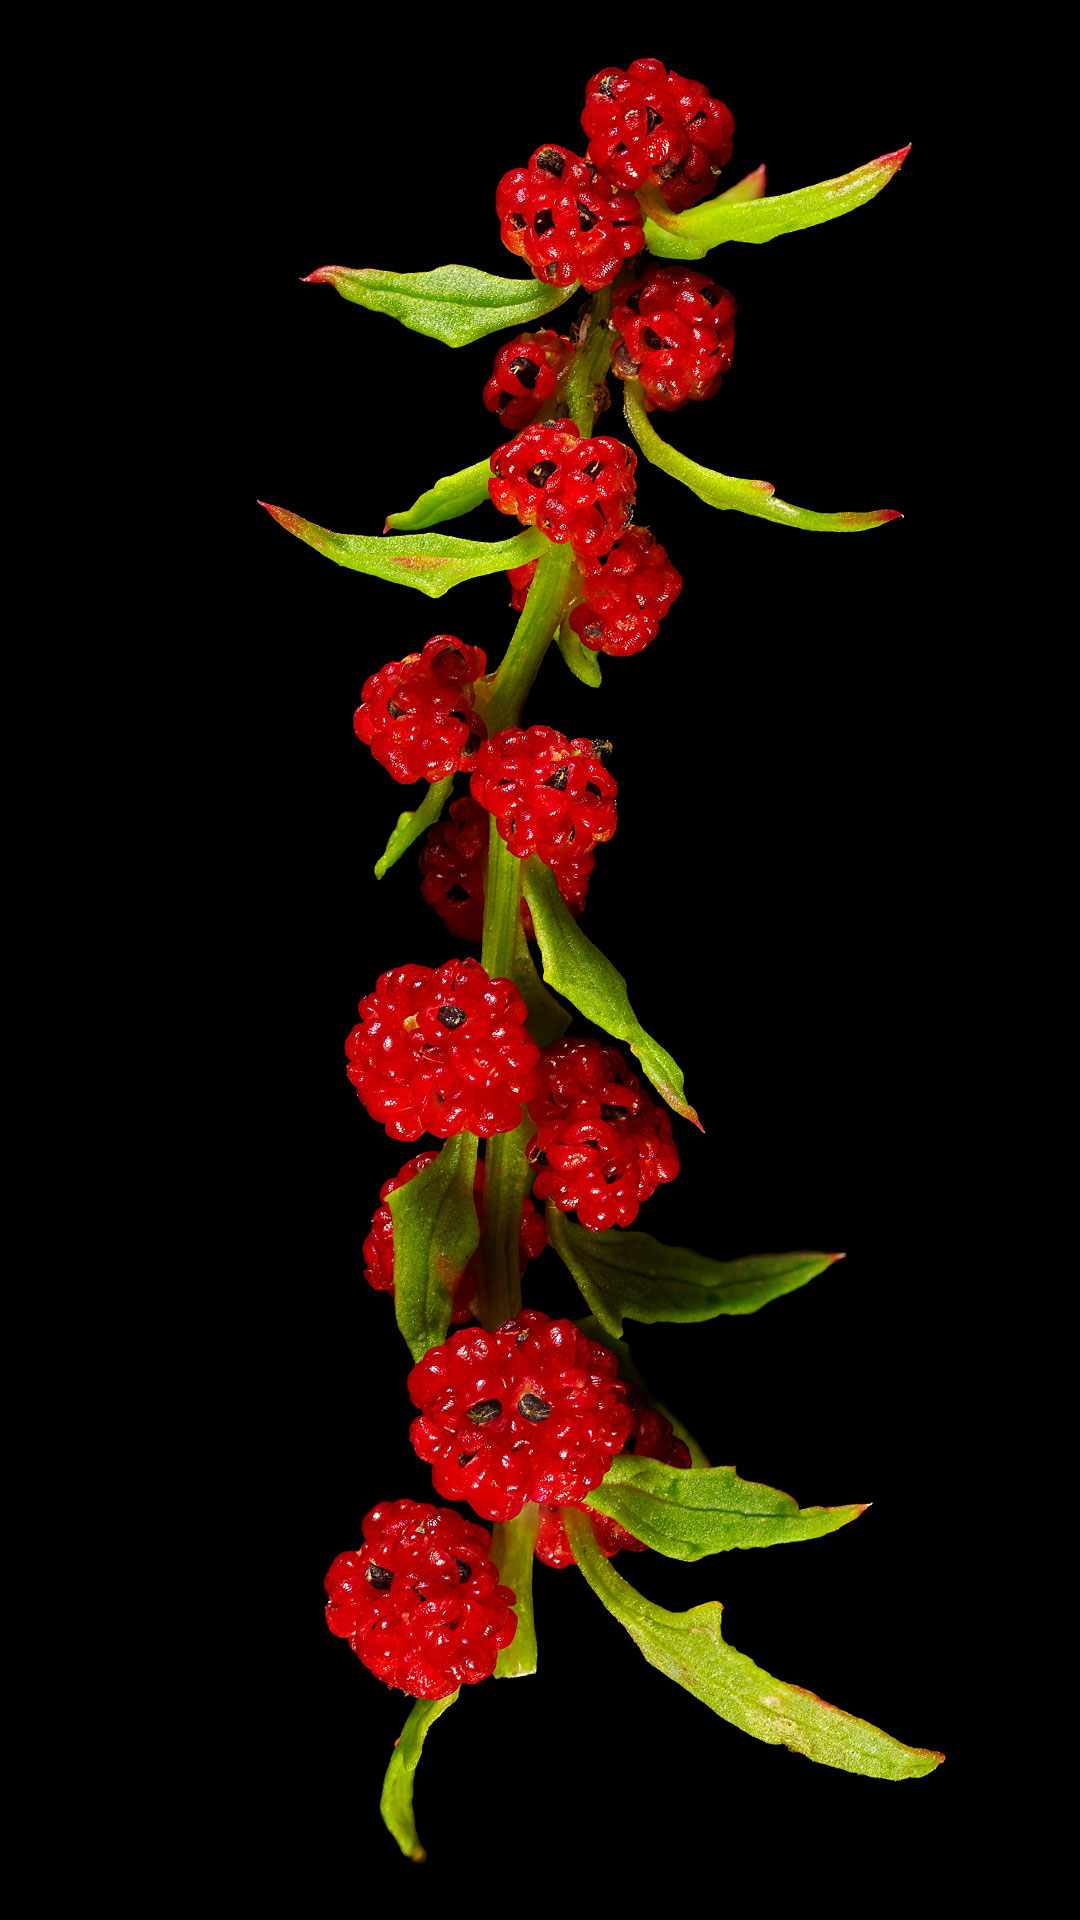 Leafy goosefoot: Blitum virgatum ‚Strawberry-Sticks‘